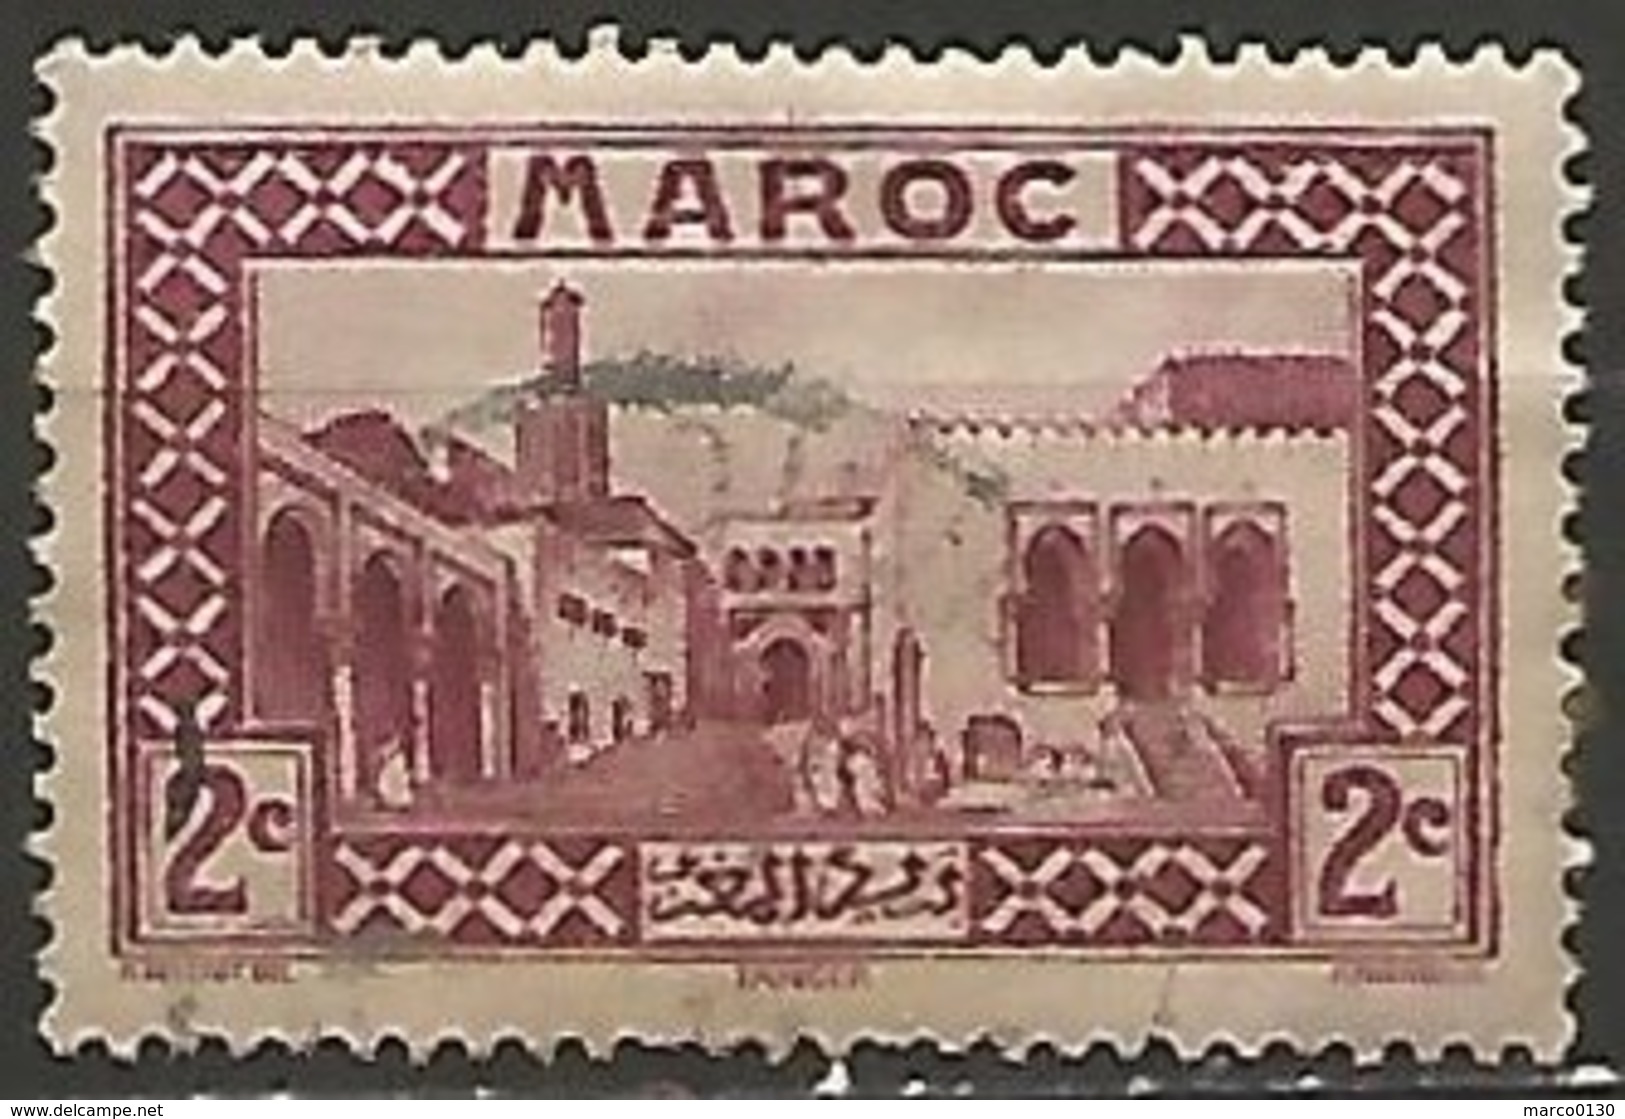 MAROC N° 129 OBLITERE - Used Stamps